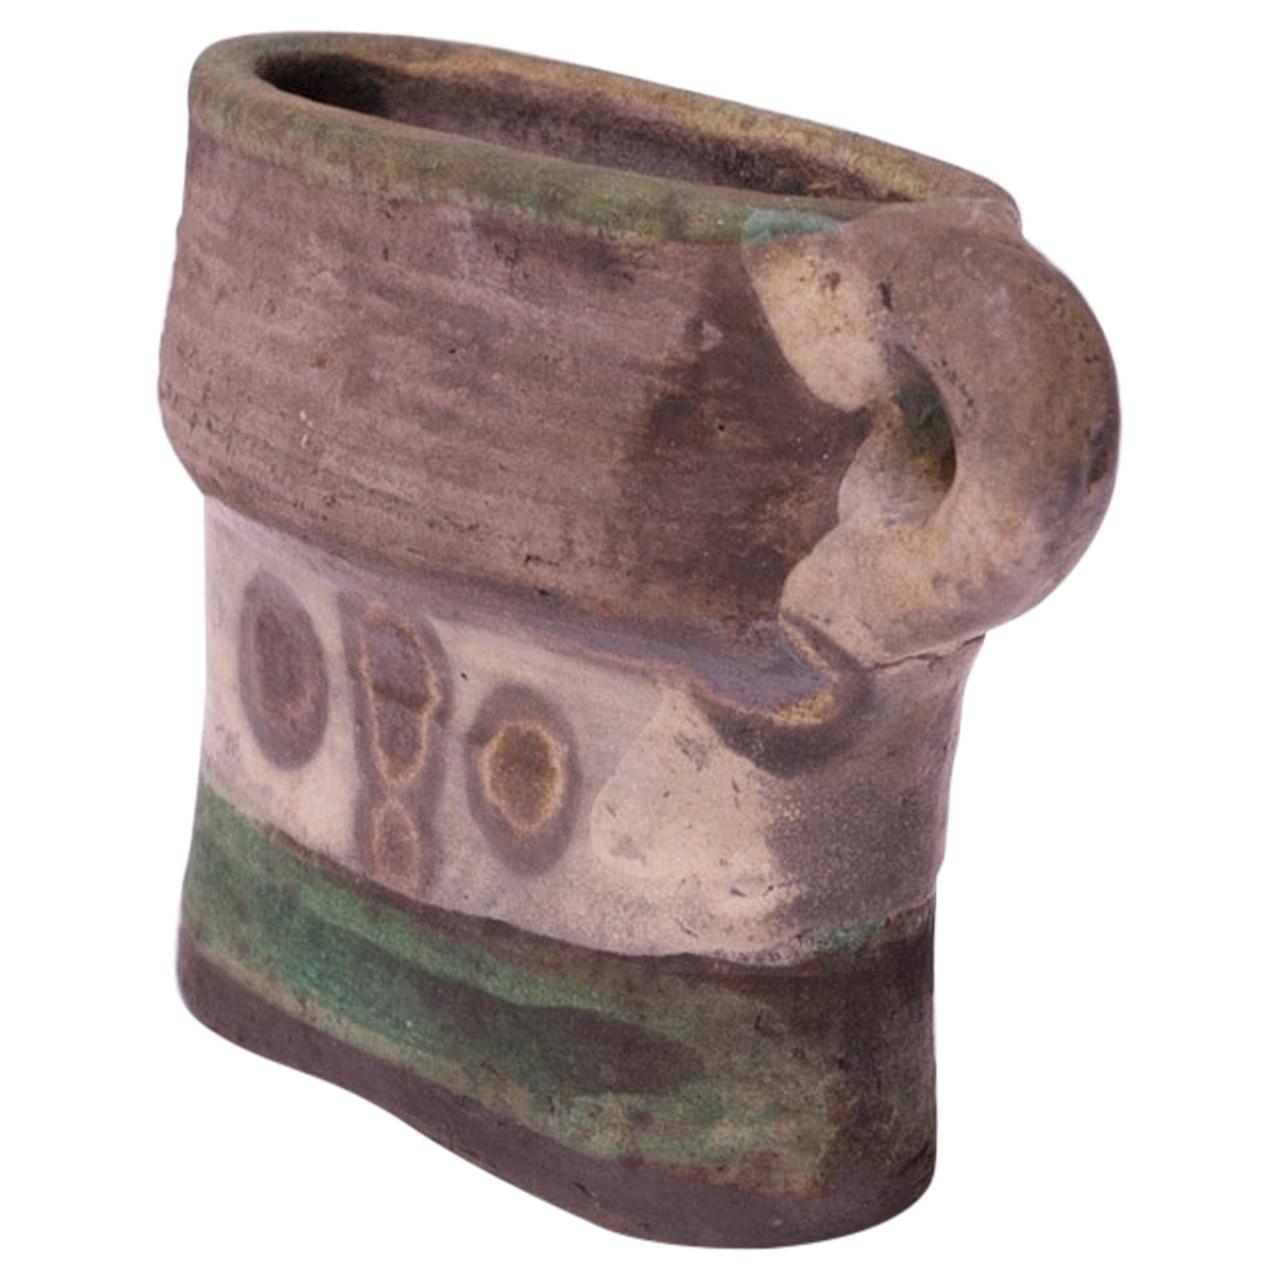 Crude / Primitive Stoneware Vase with Handle Signed "Pollack 78"